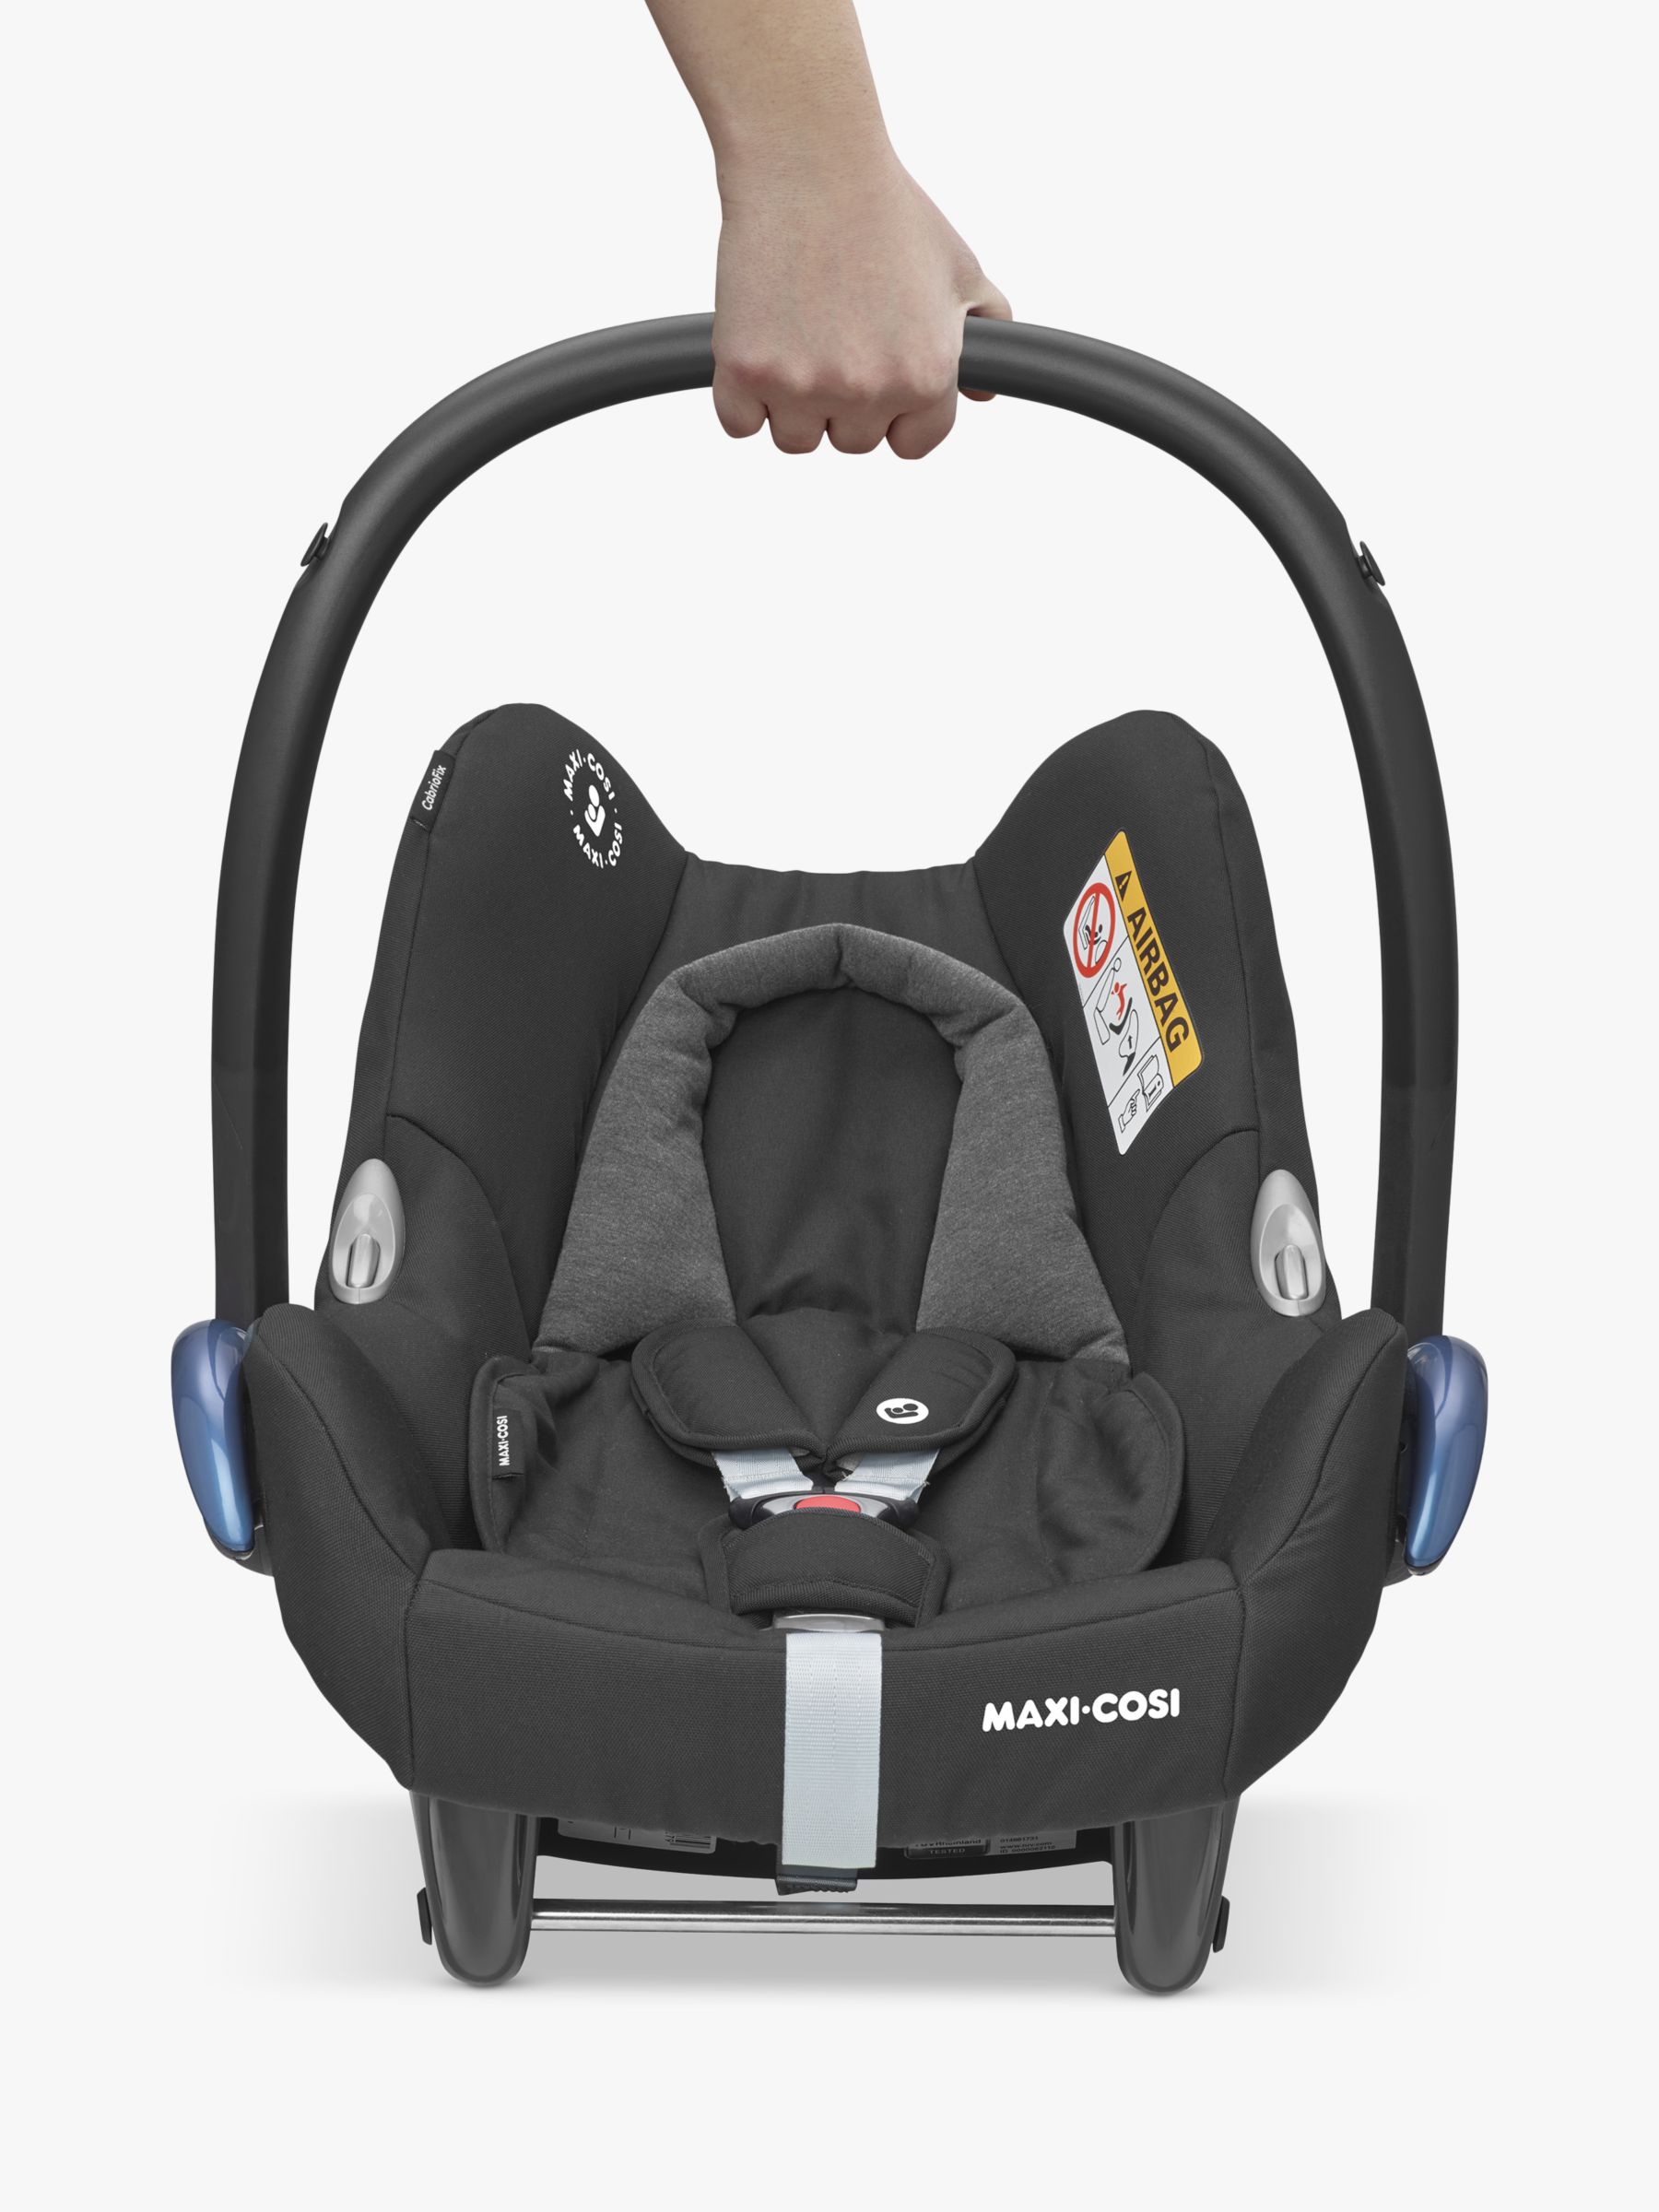 Maxi Cosi Cabriofix Group 0 Baby Car Seat Essential Black At John Lewis Partners